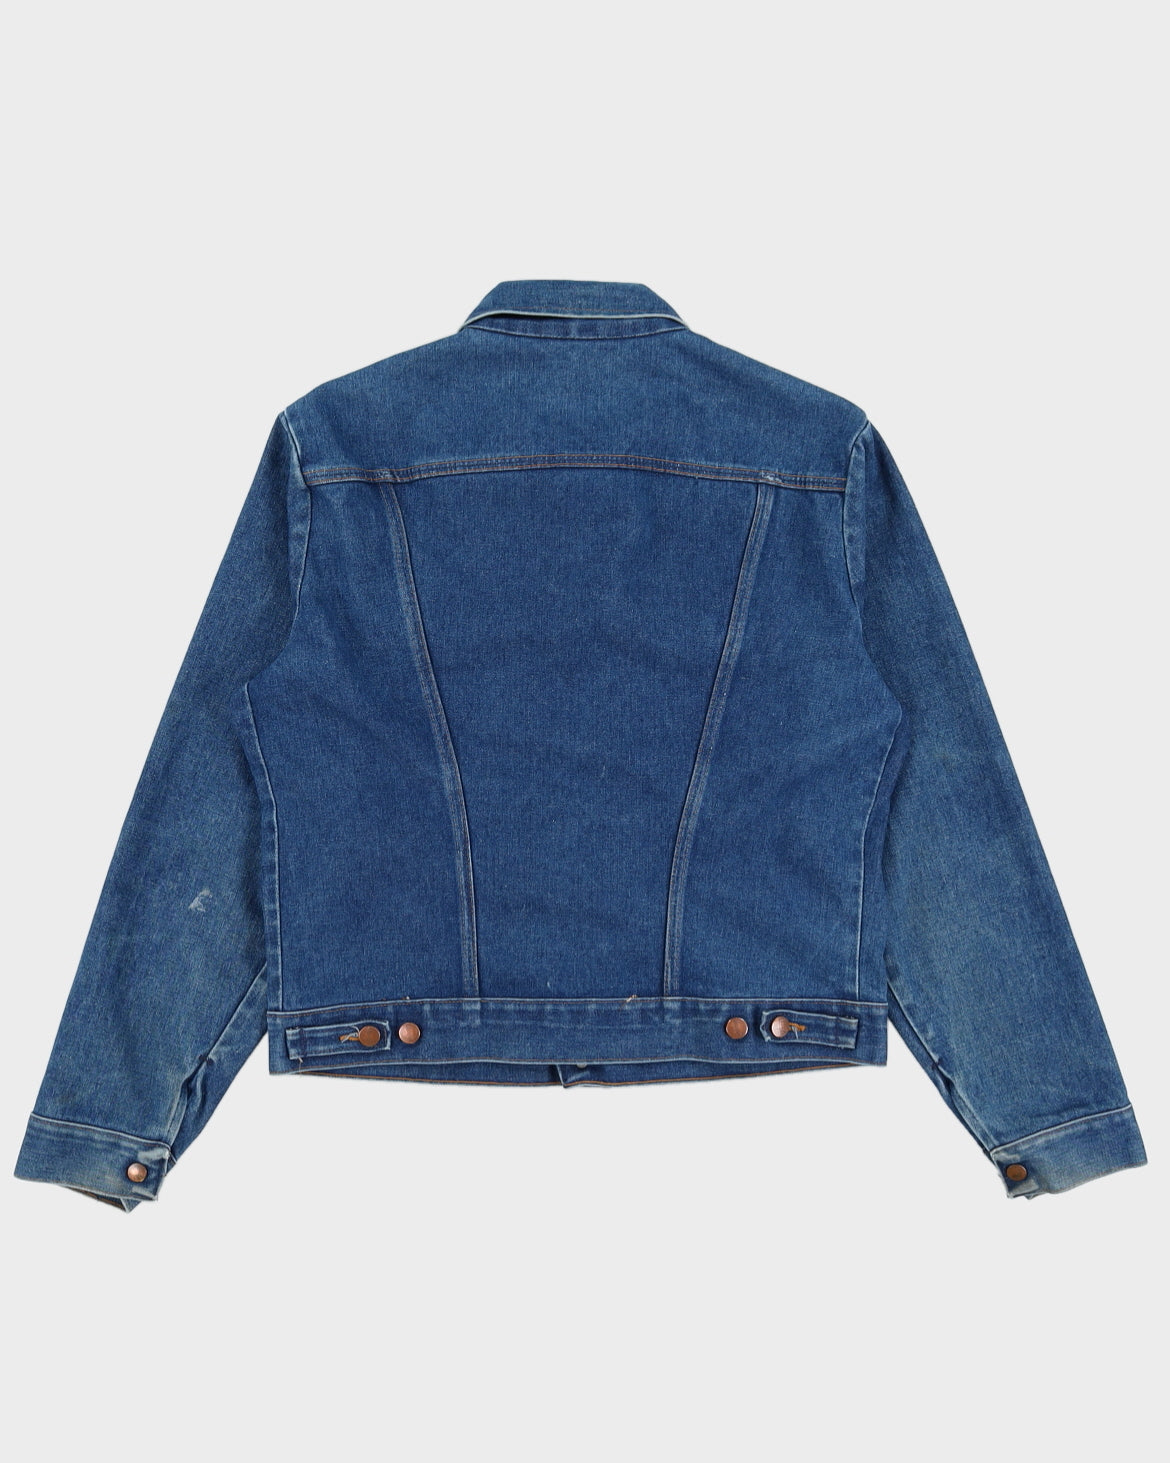 Vintage 70s Wrangler Medium Wash Blue Denim Jacket - M